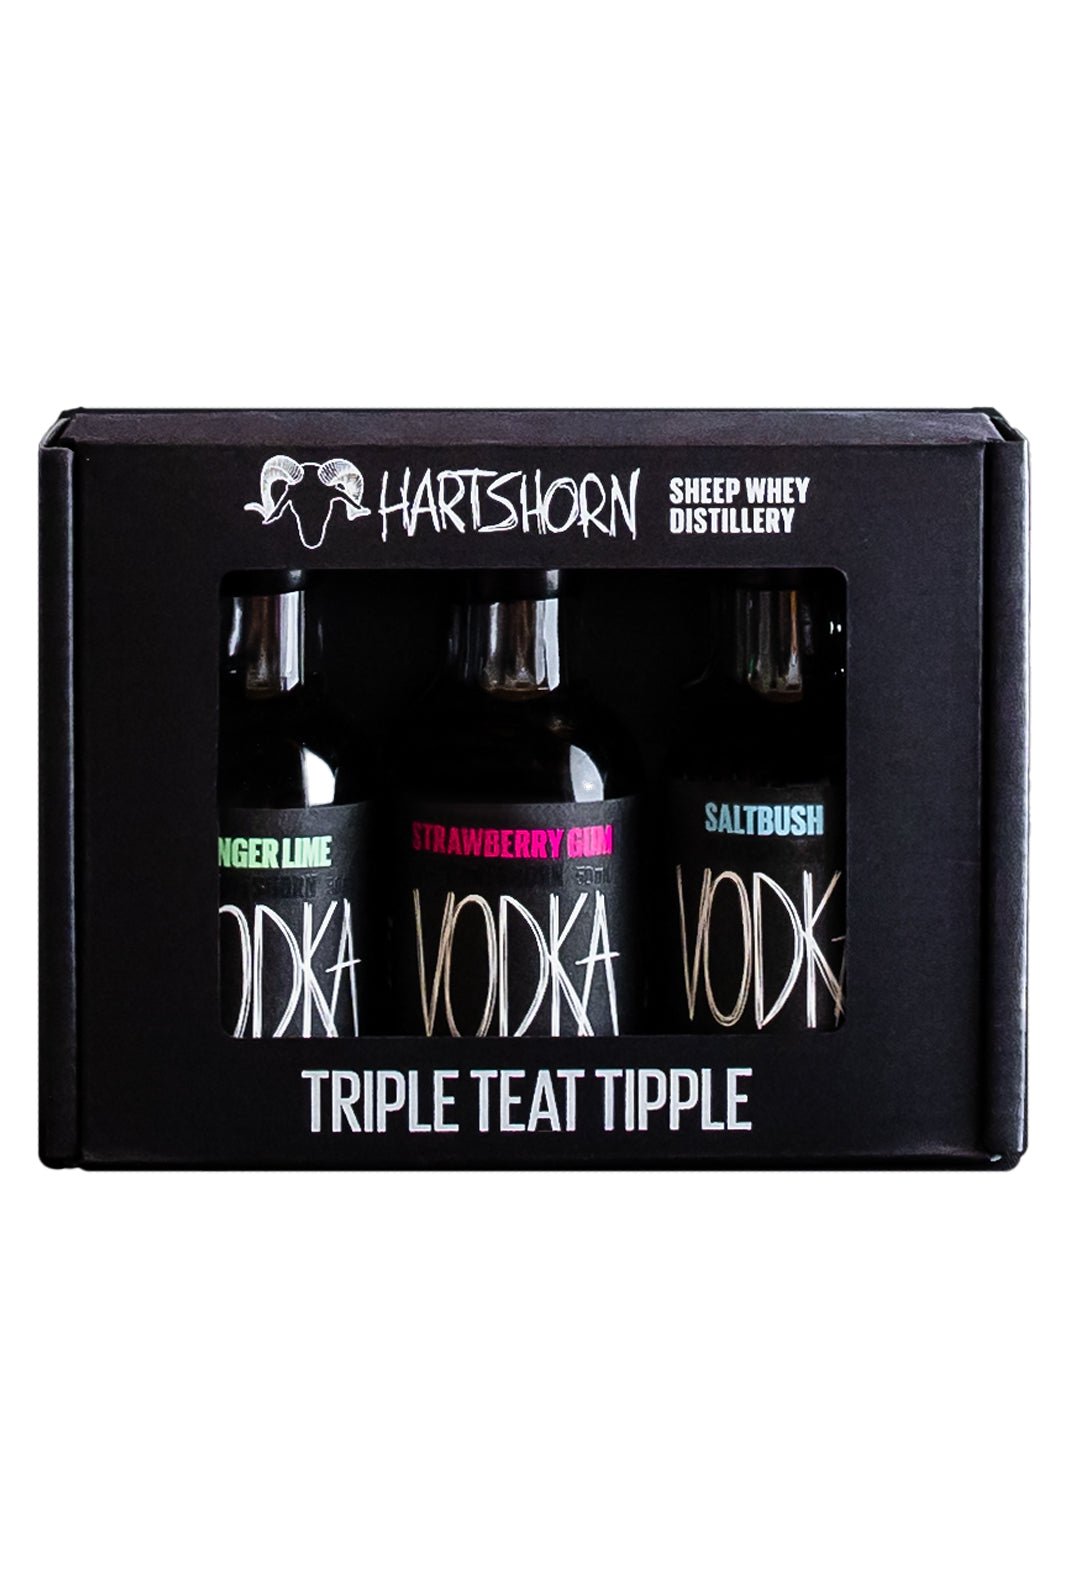 Hartshorn Trio Finger Lime, Saltbush, Strawberry gum Vodka 50ml - Vodka - Liquor Wine Cave